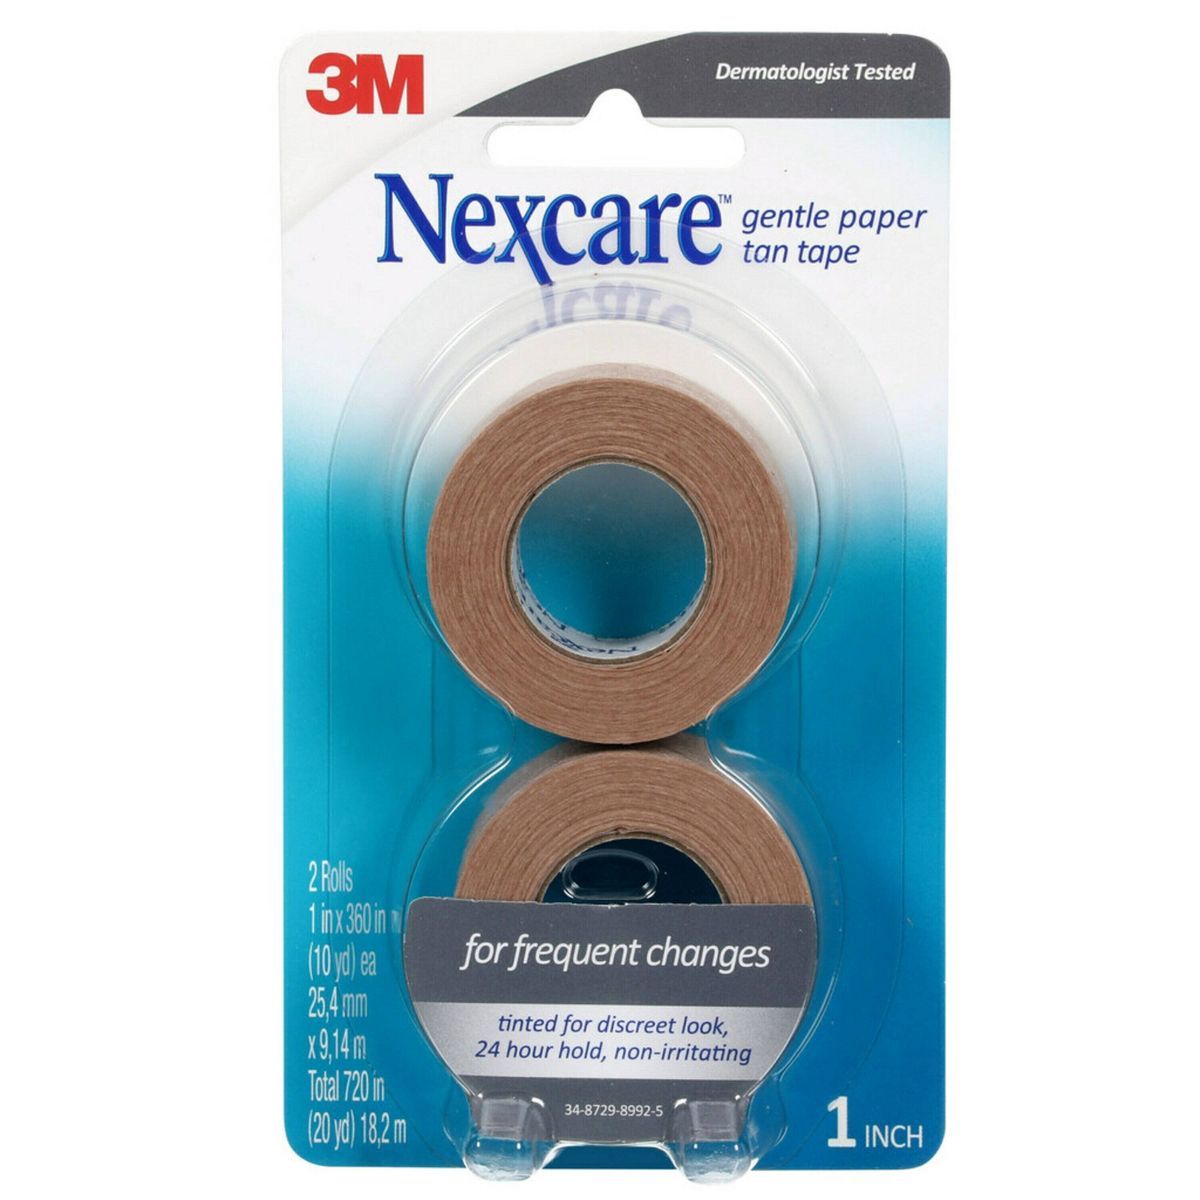 Nexcare Gentle Paper Tan Tape - 2pk | Target